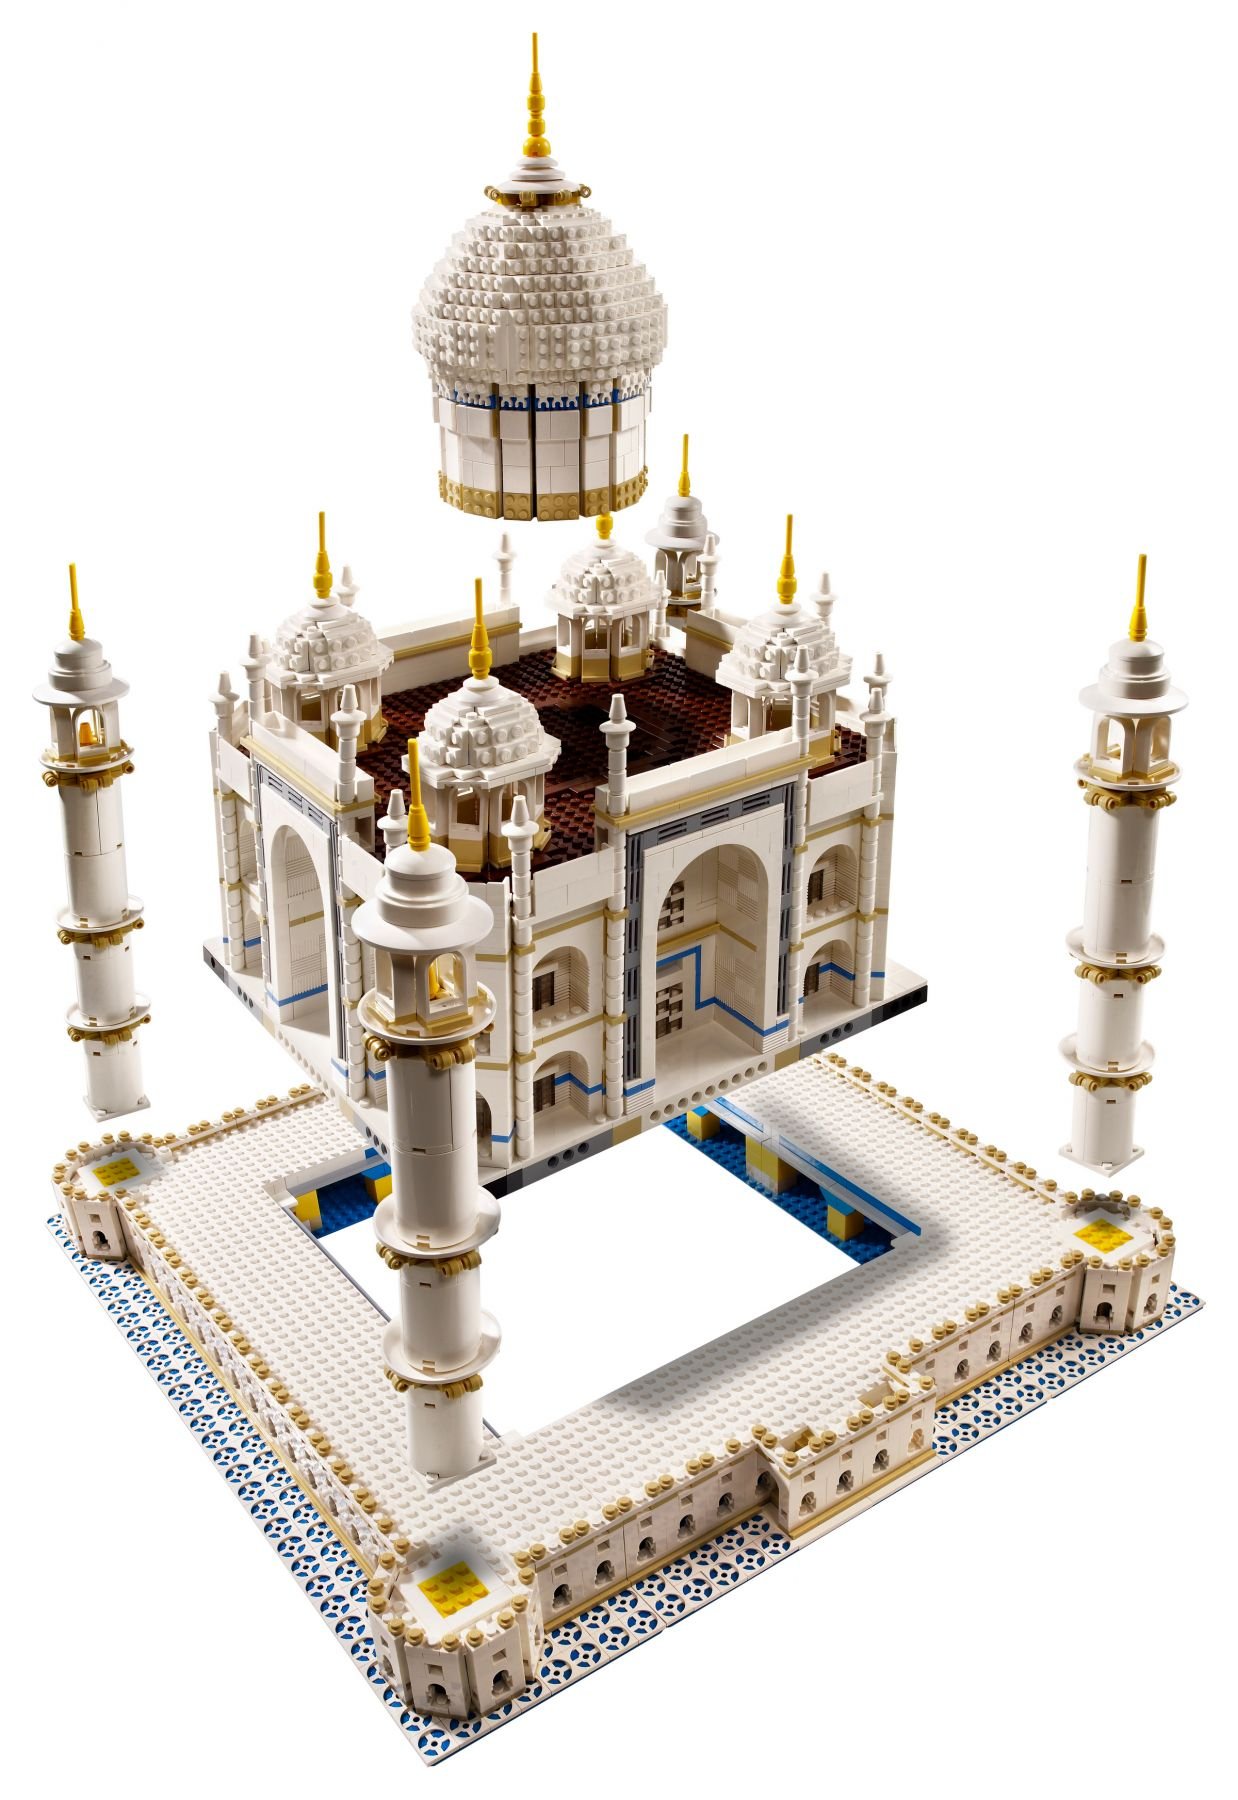 LEGO Advanced Models 10256 Taj Mahal LEGO_10256_alt8.jpg